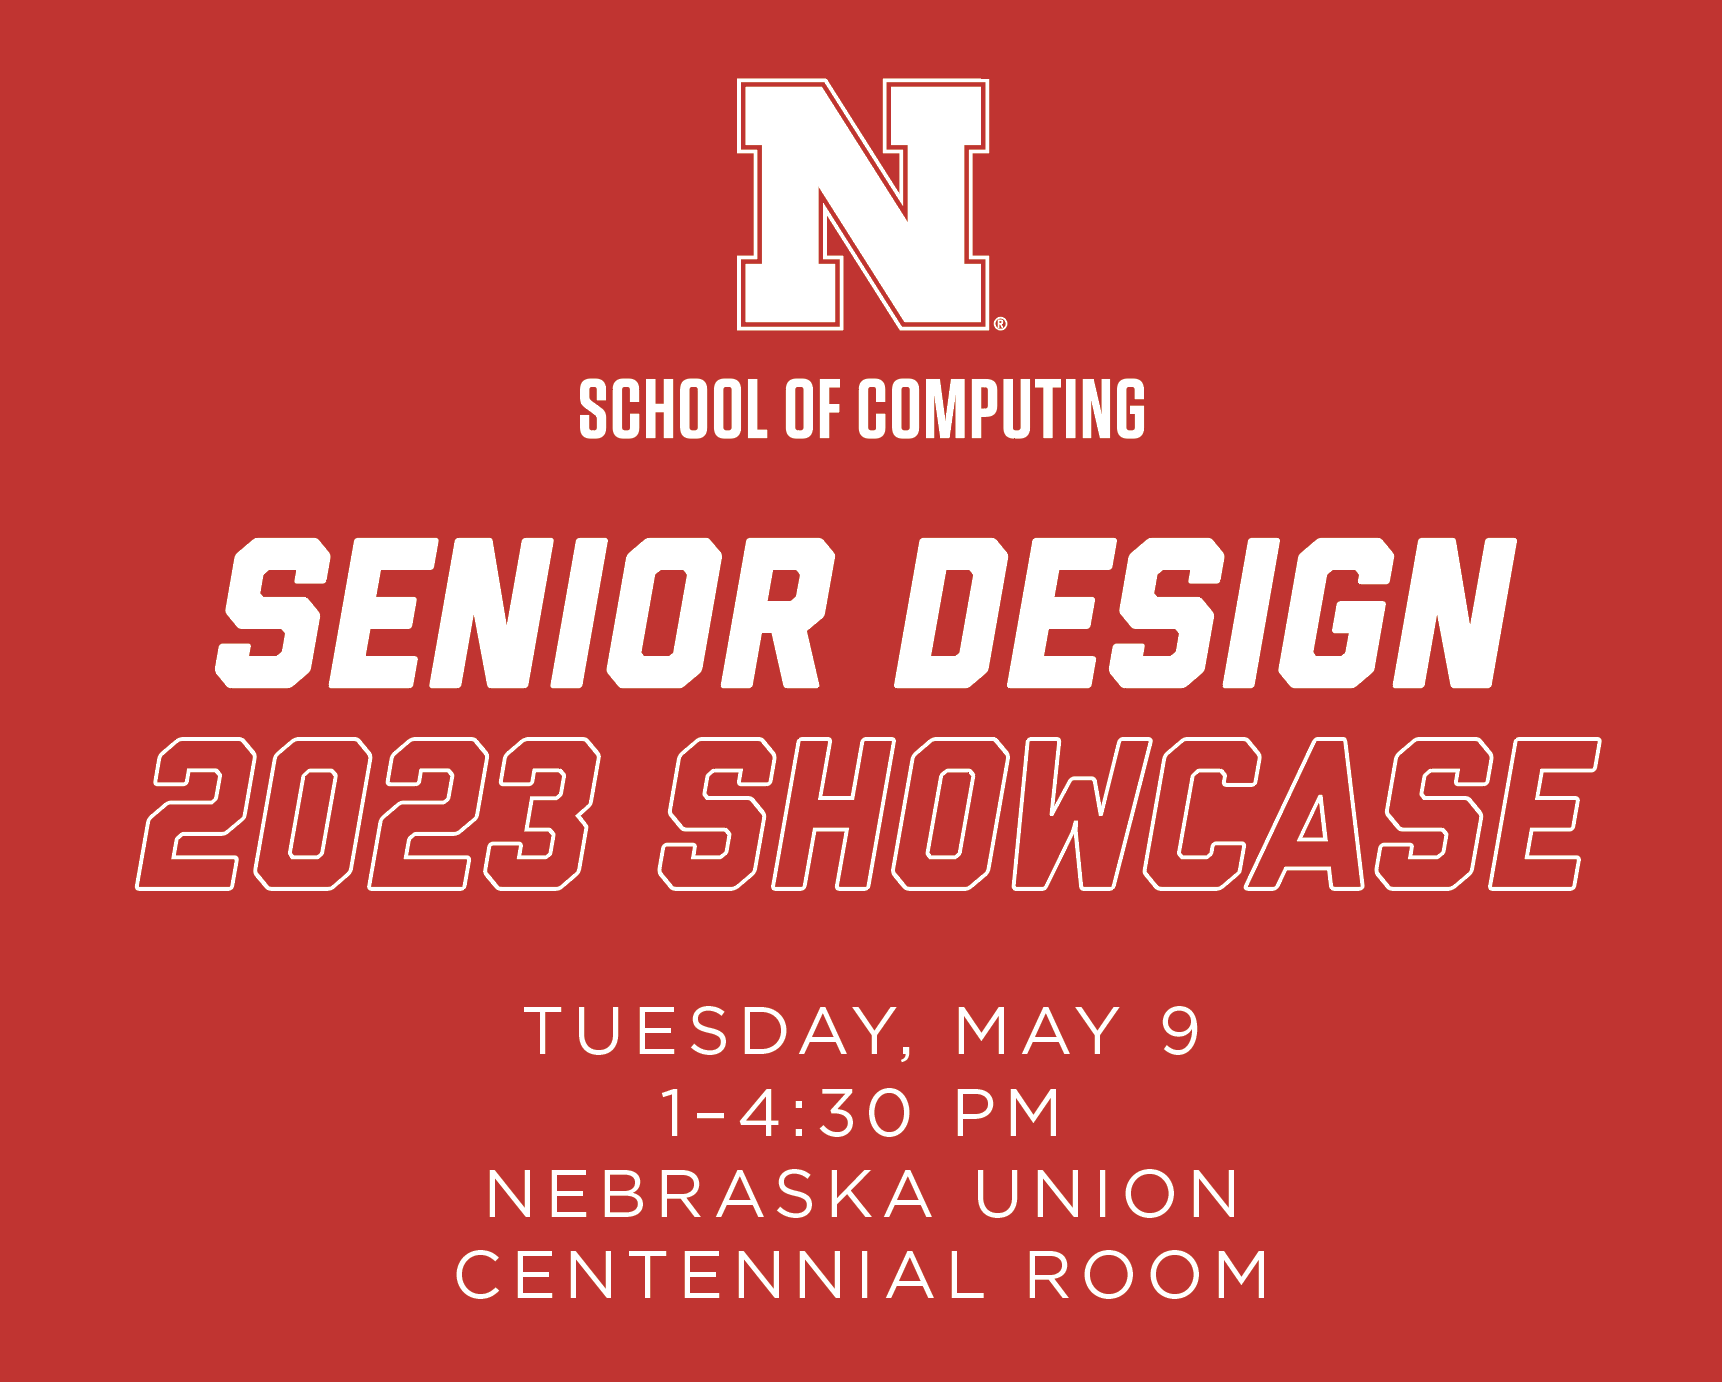 The 2023 Senior Design Showcase